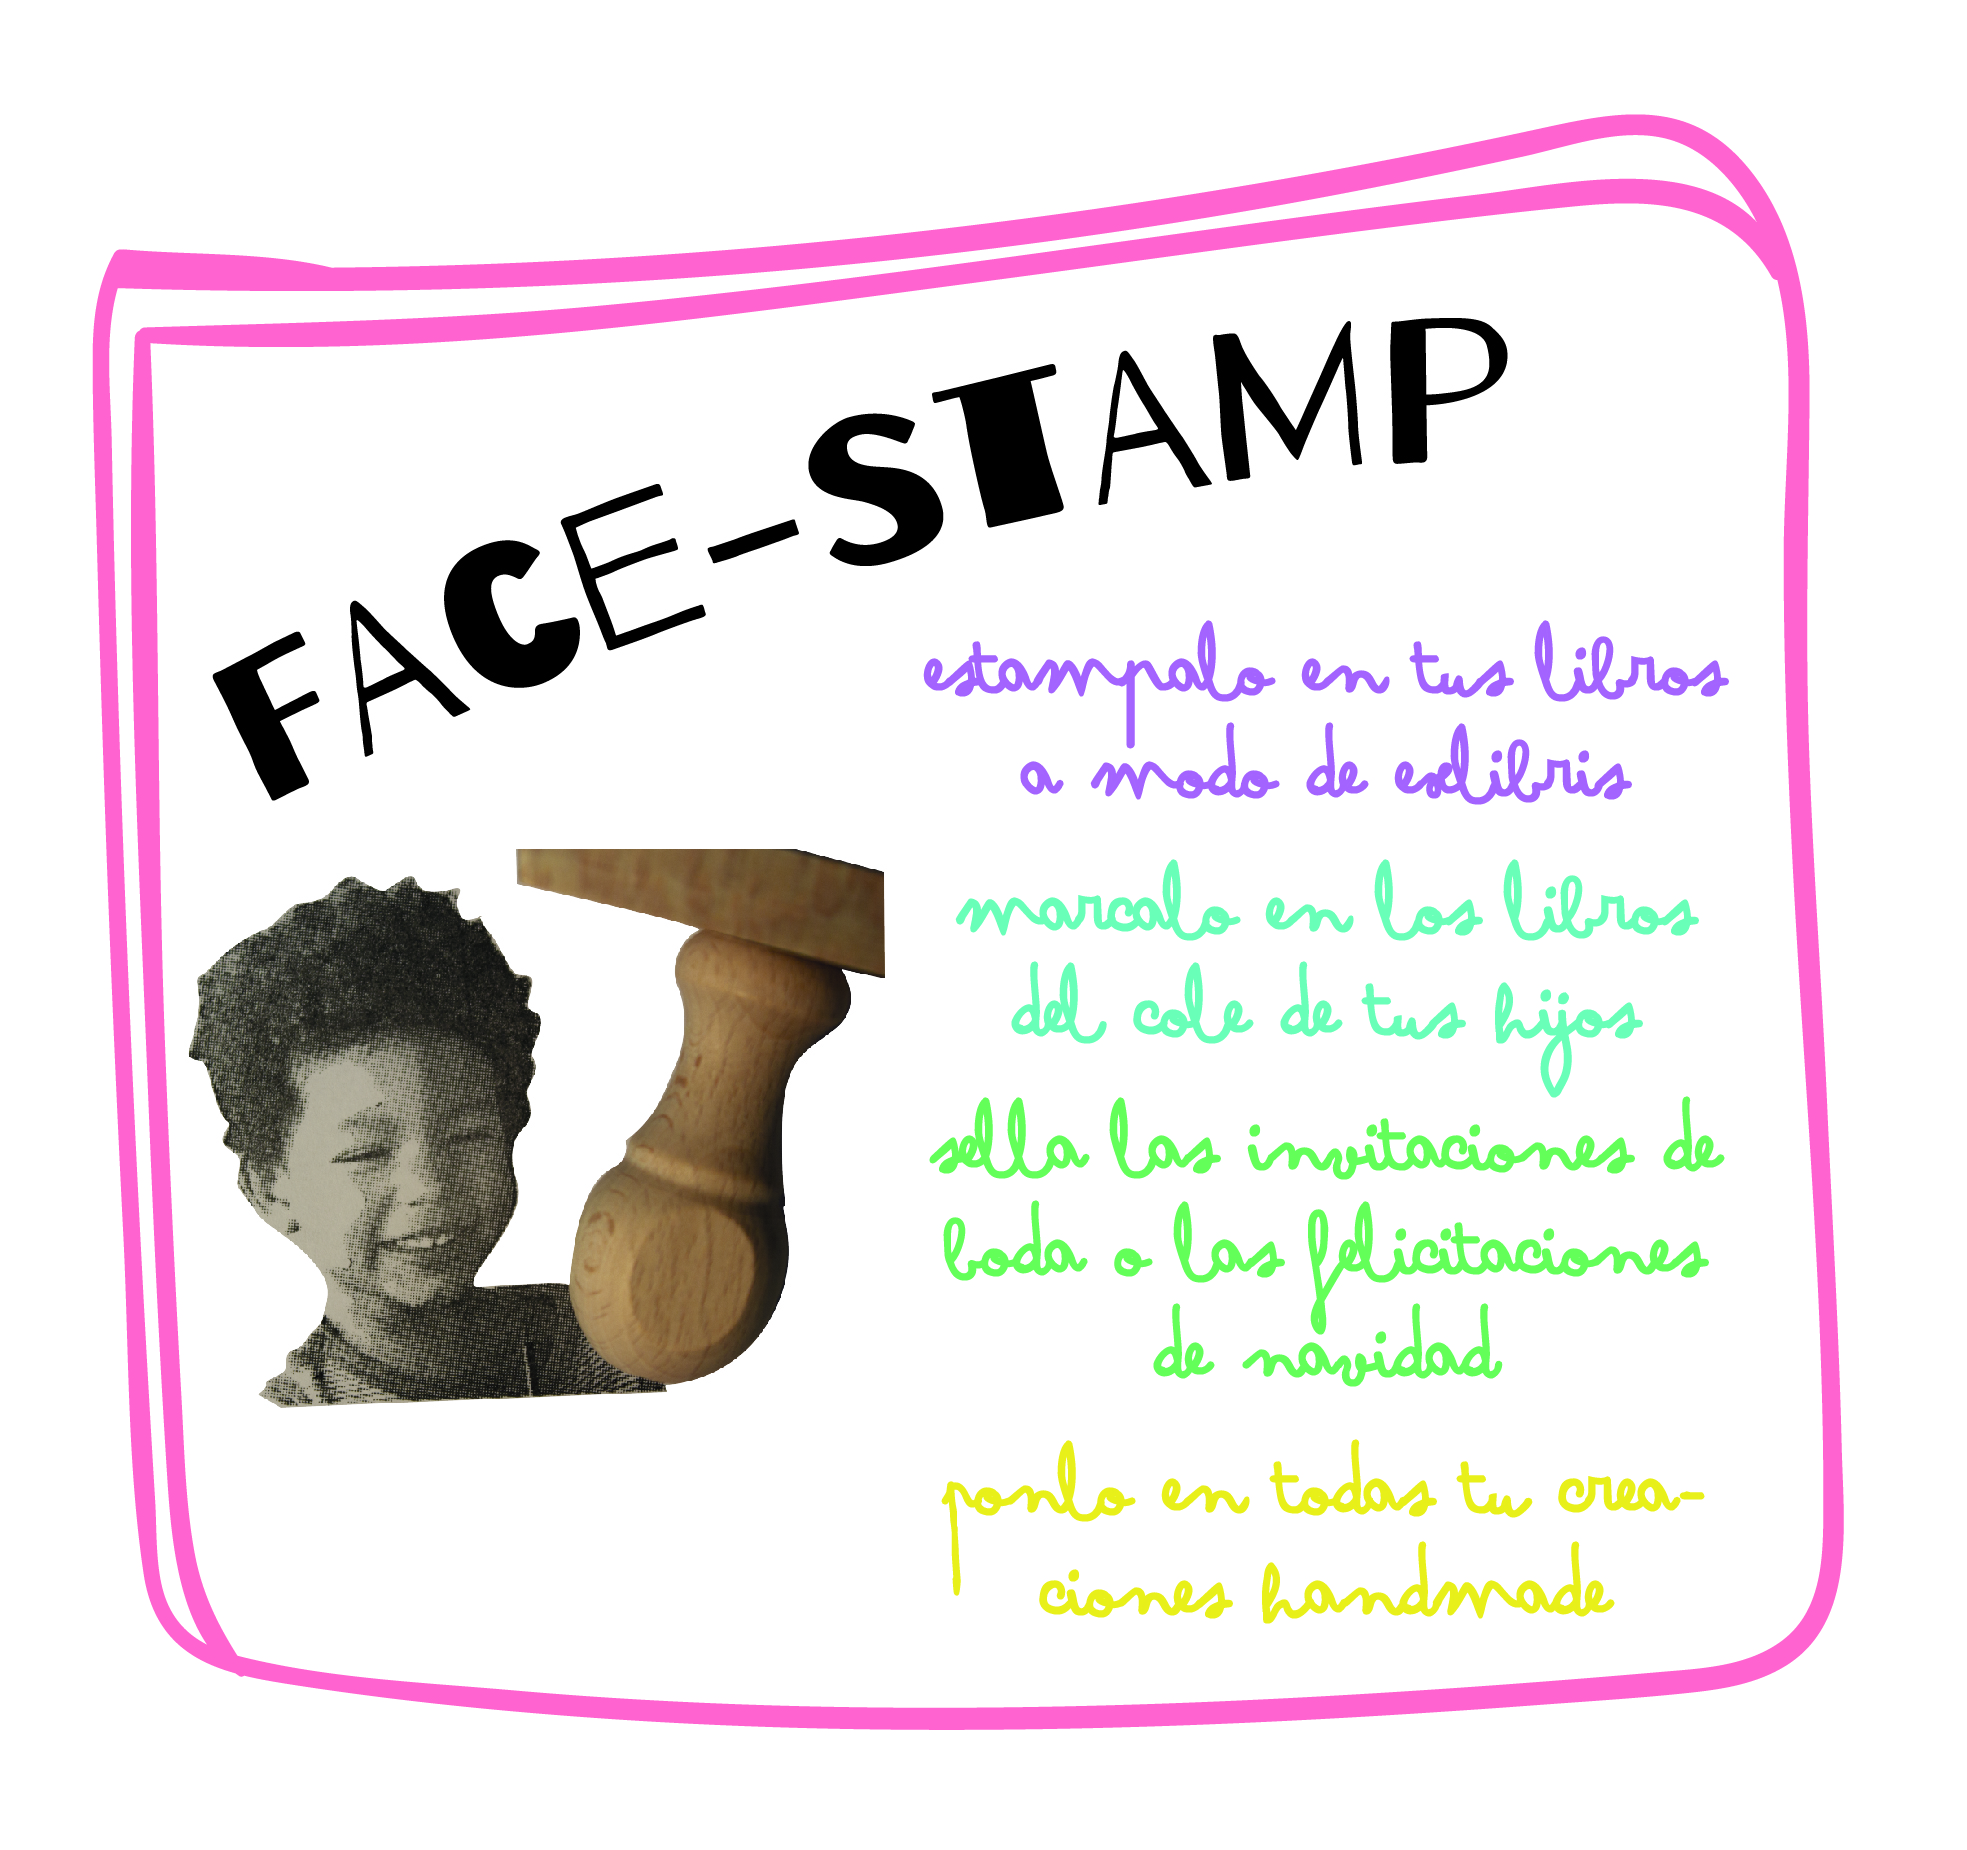 usos para face-stamp